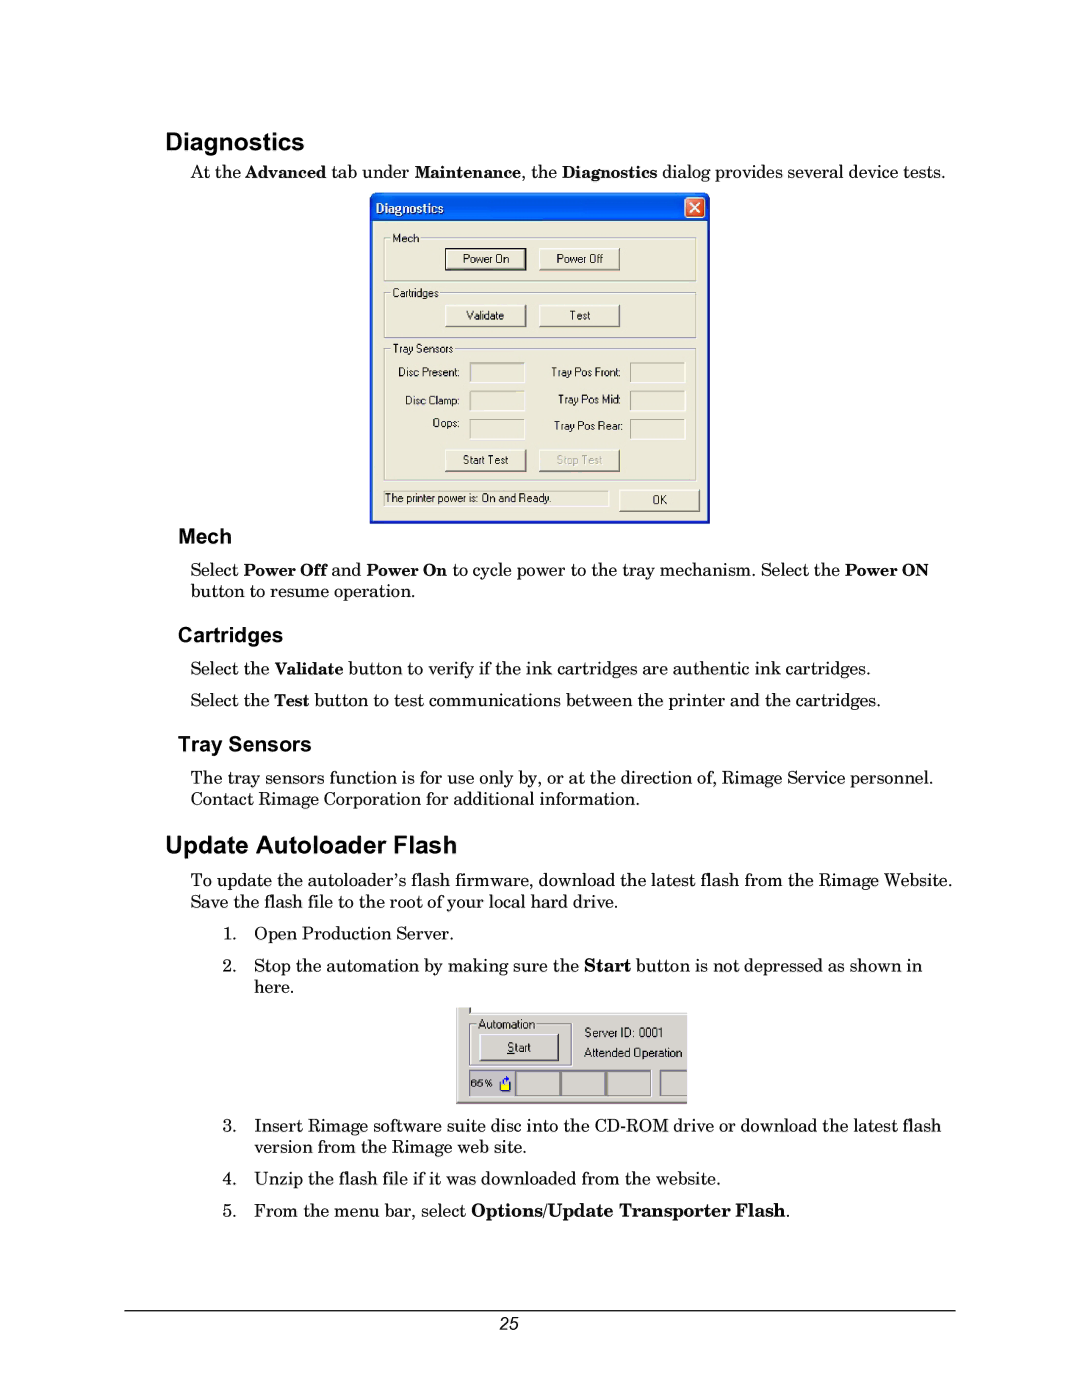 Rimage 110716-000 manual Diagnostics, Update Autoloader Flash, From the menu bar, select Options/Update Transporter Flash 